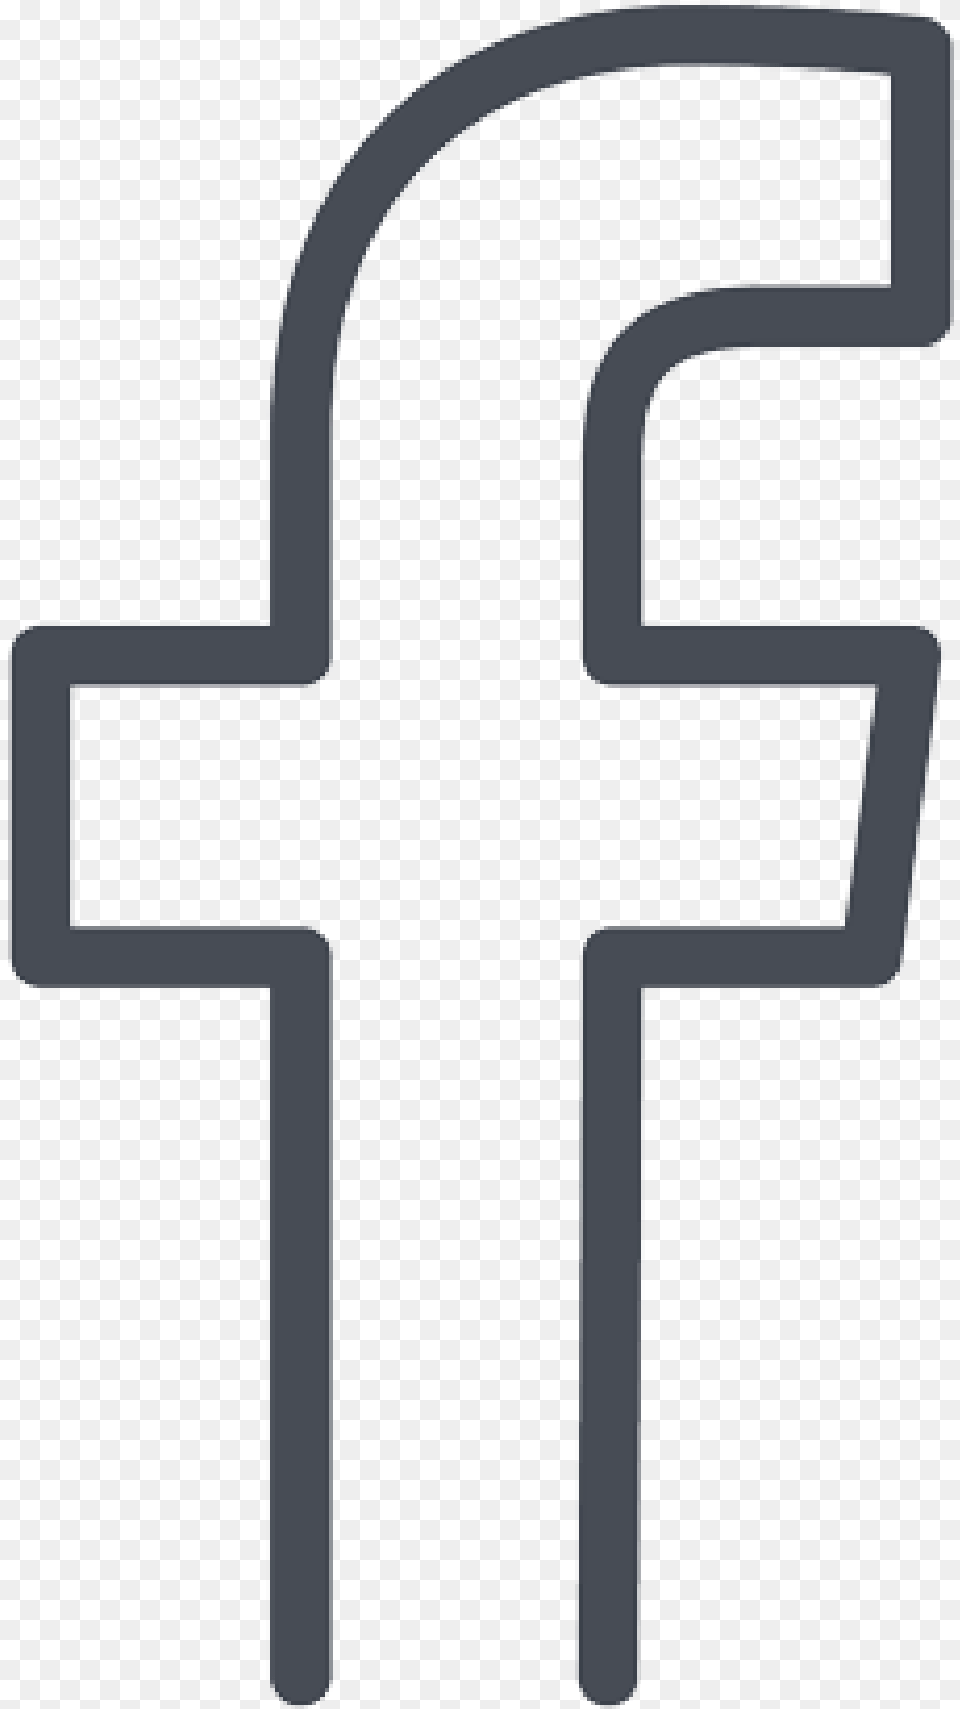 Transparent Christian Cross Designs Clip Art Facebook Logo Outline White, Symbol Png Image